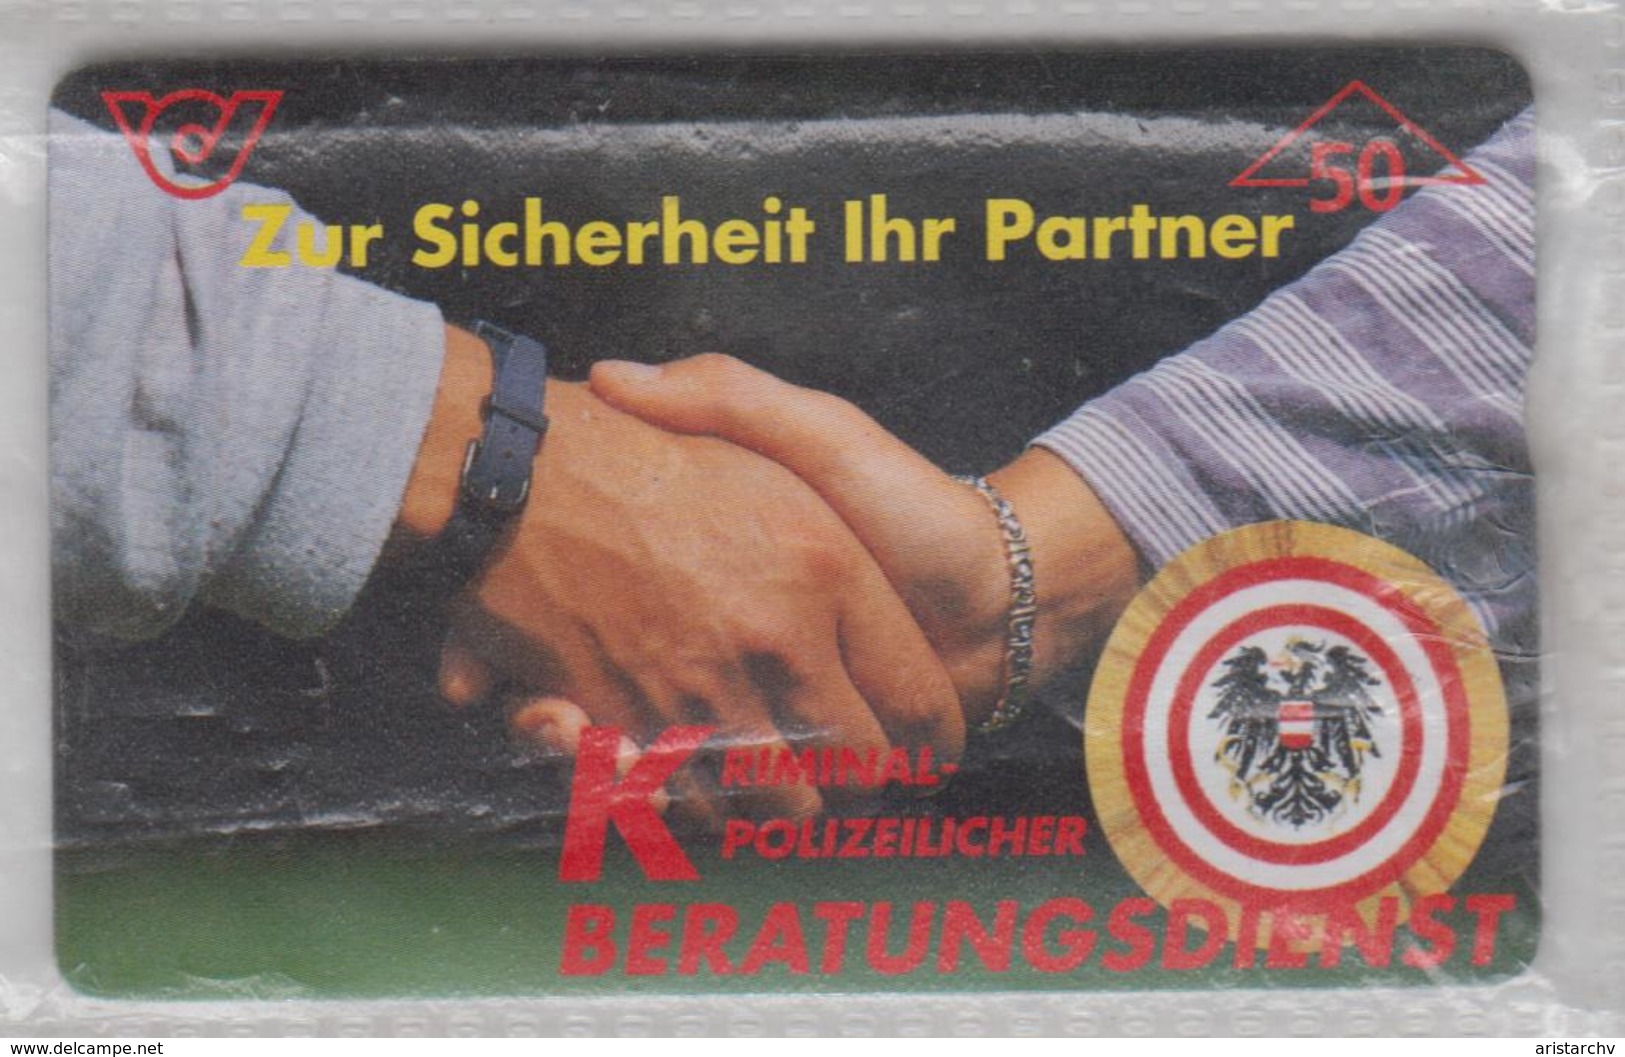 AUSTRIA 1996 KRIMINALPOLIZEILICHER BERATUNGSDIENST CRIMINAL POLICE USED PHONE CARD - Polizei